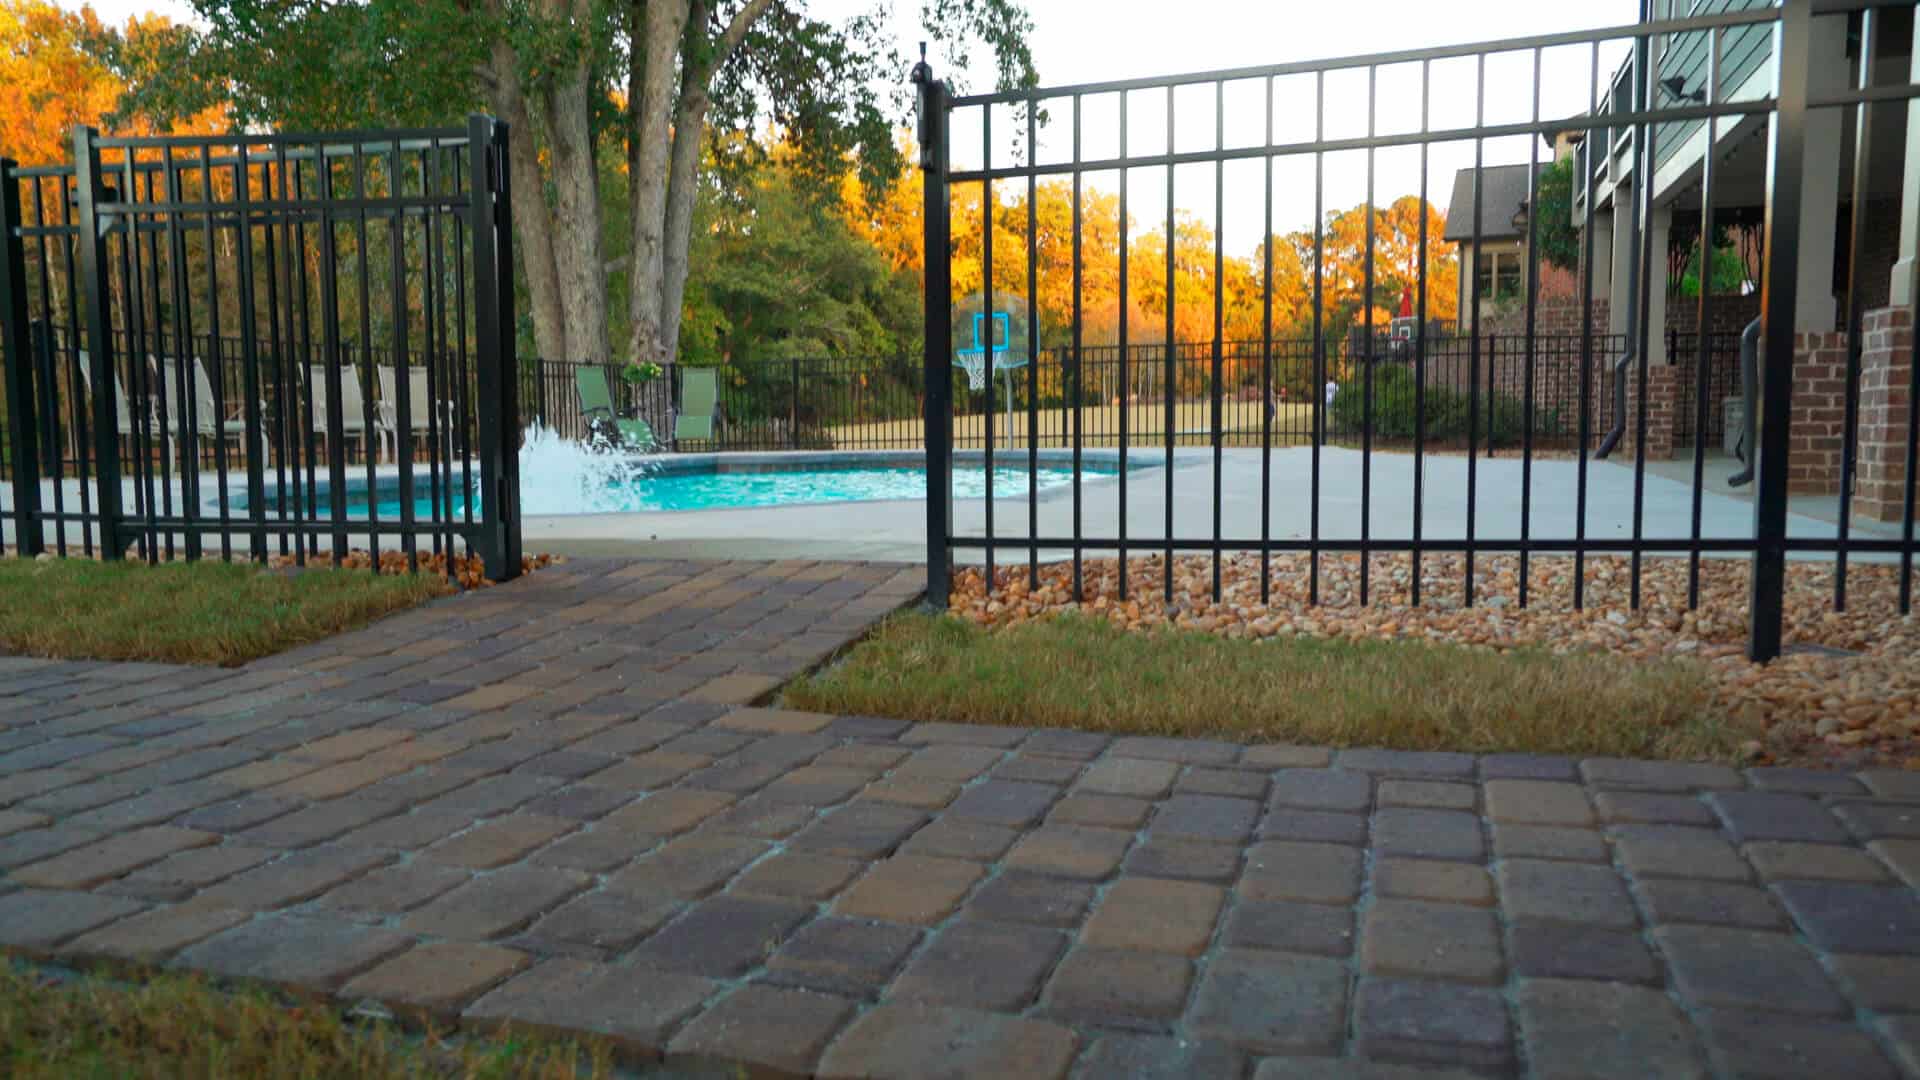 Pool gate with walkway